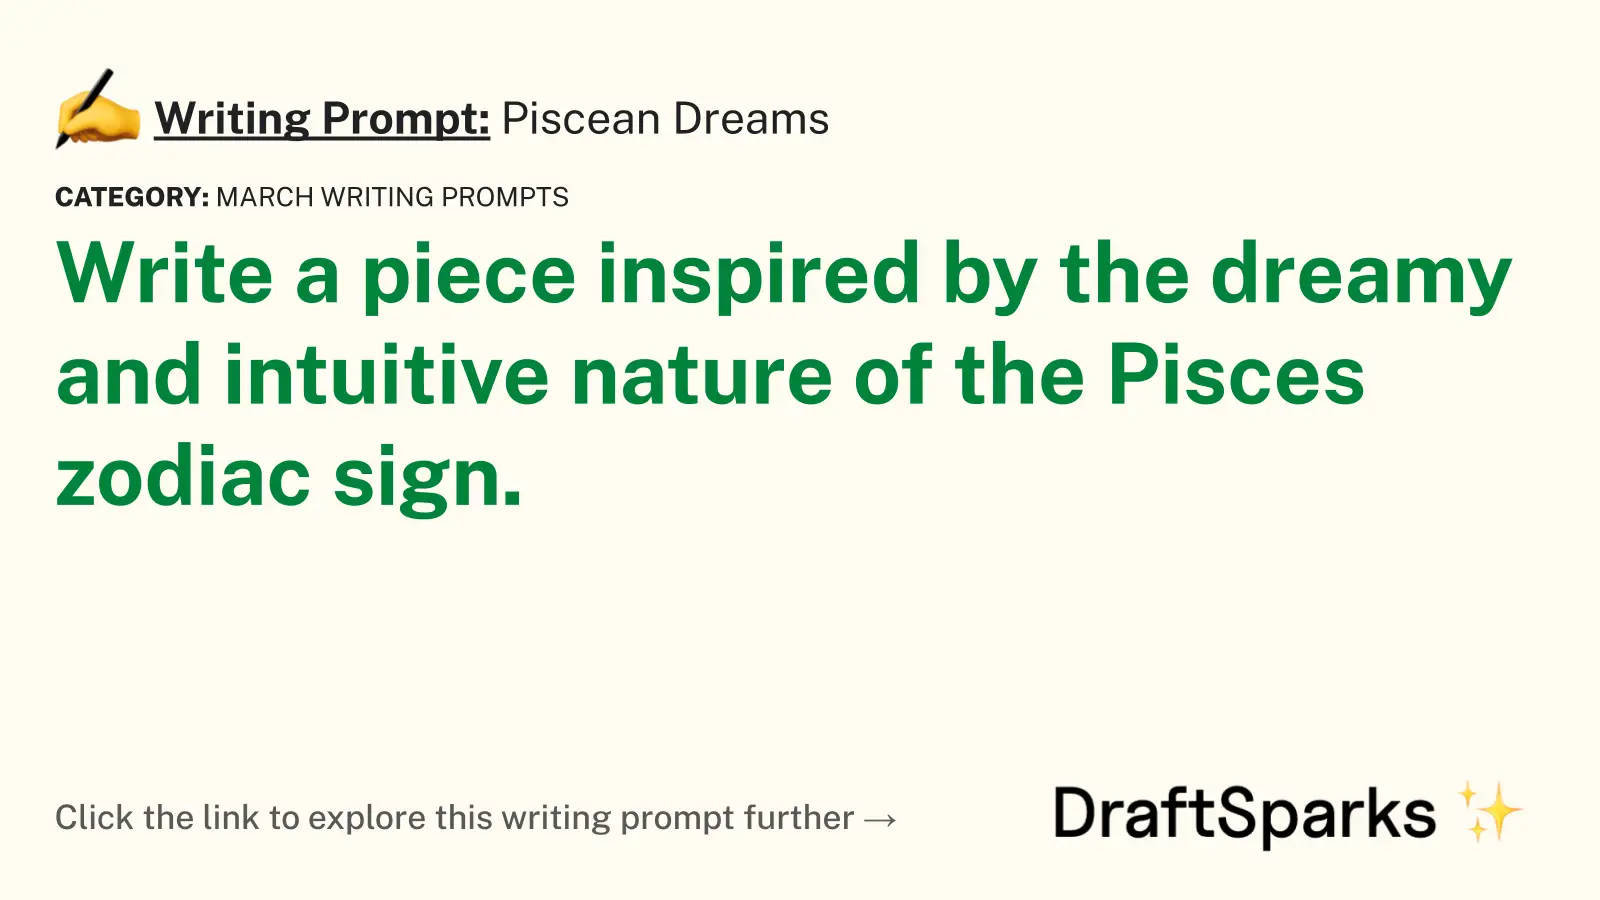 Piscean Dreams